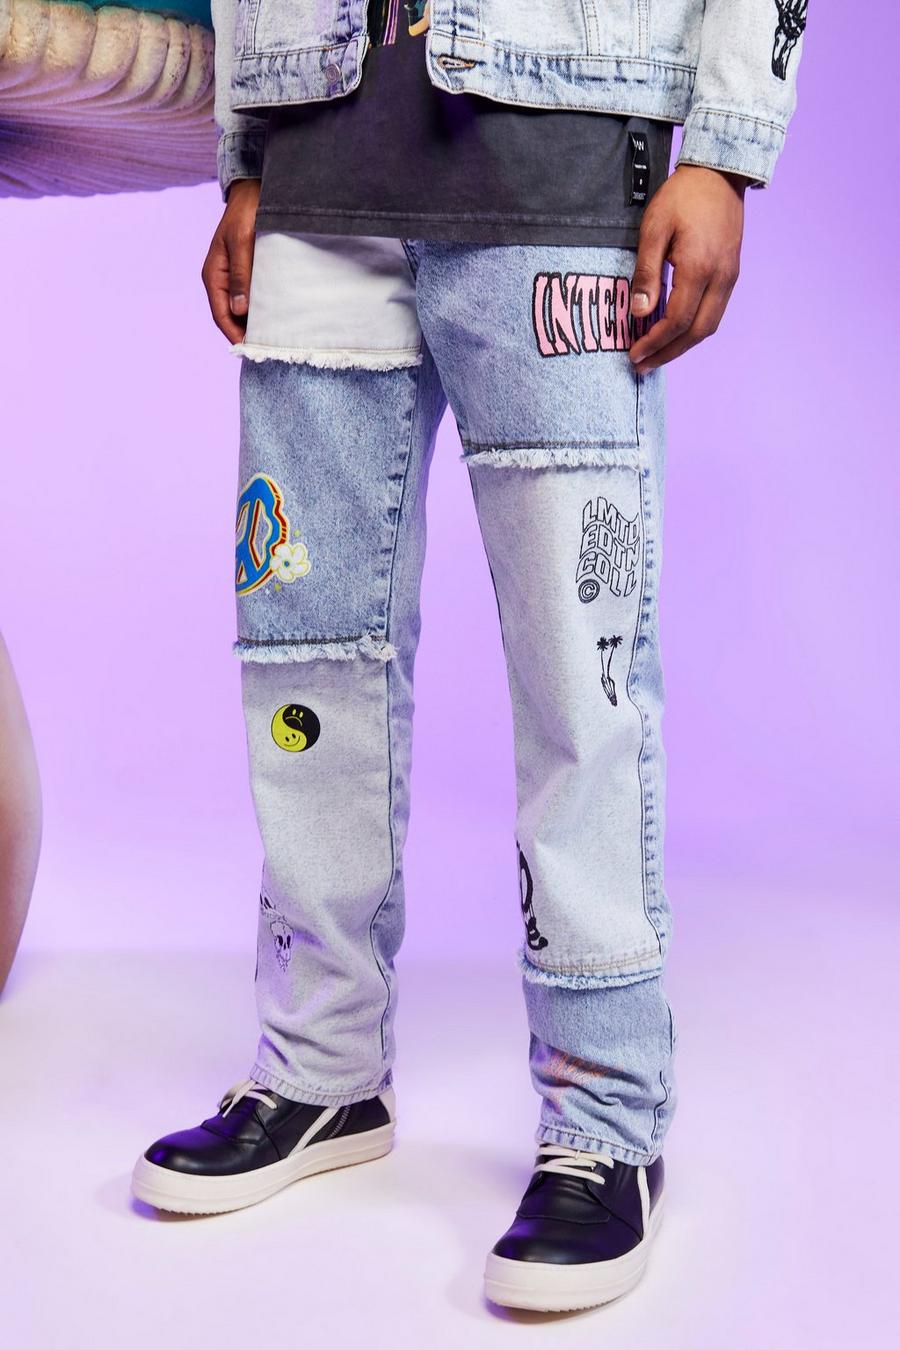 Lockere Patchwork Jeans mit Print, Multi